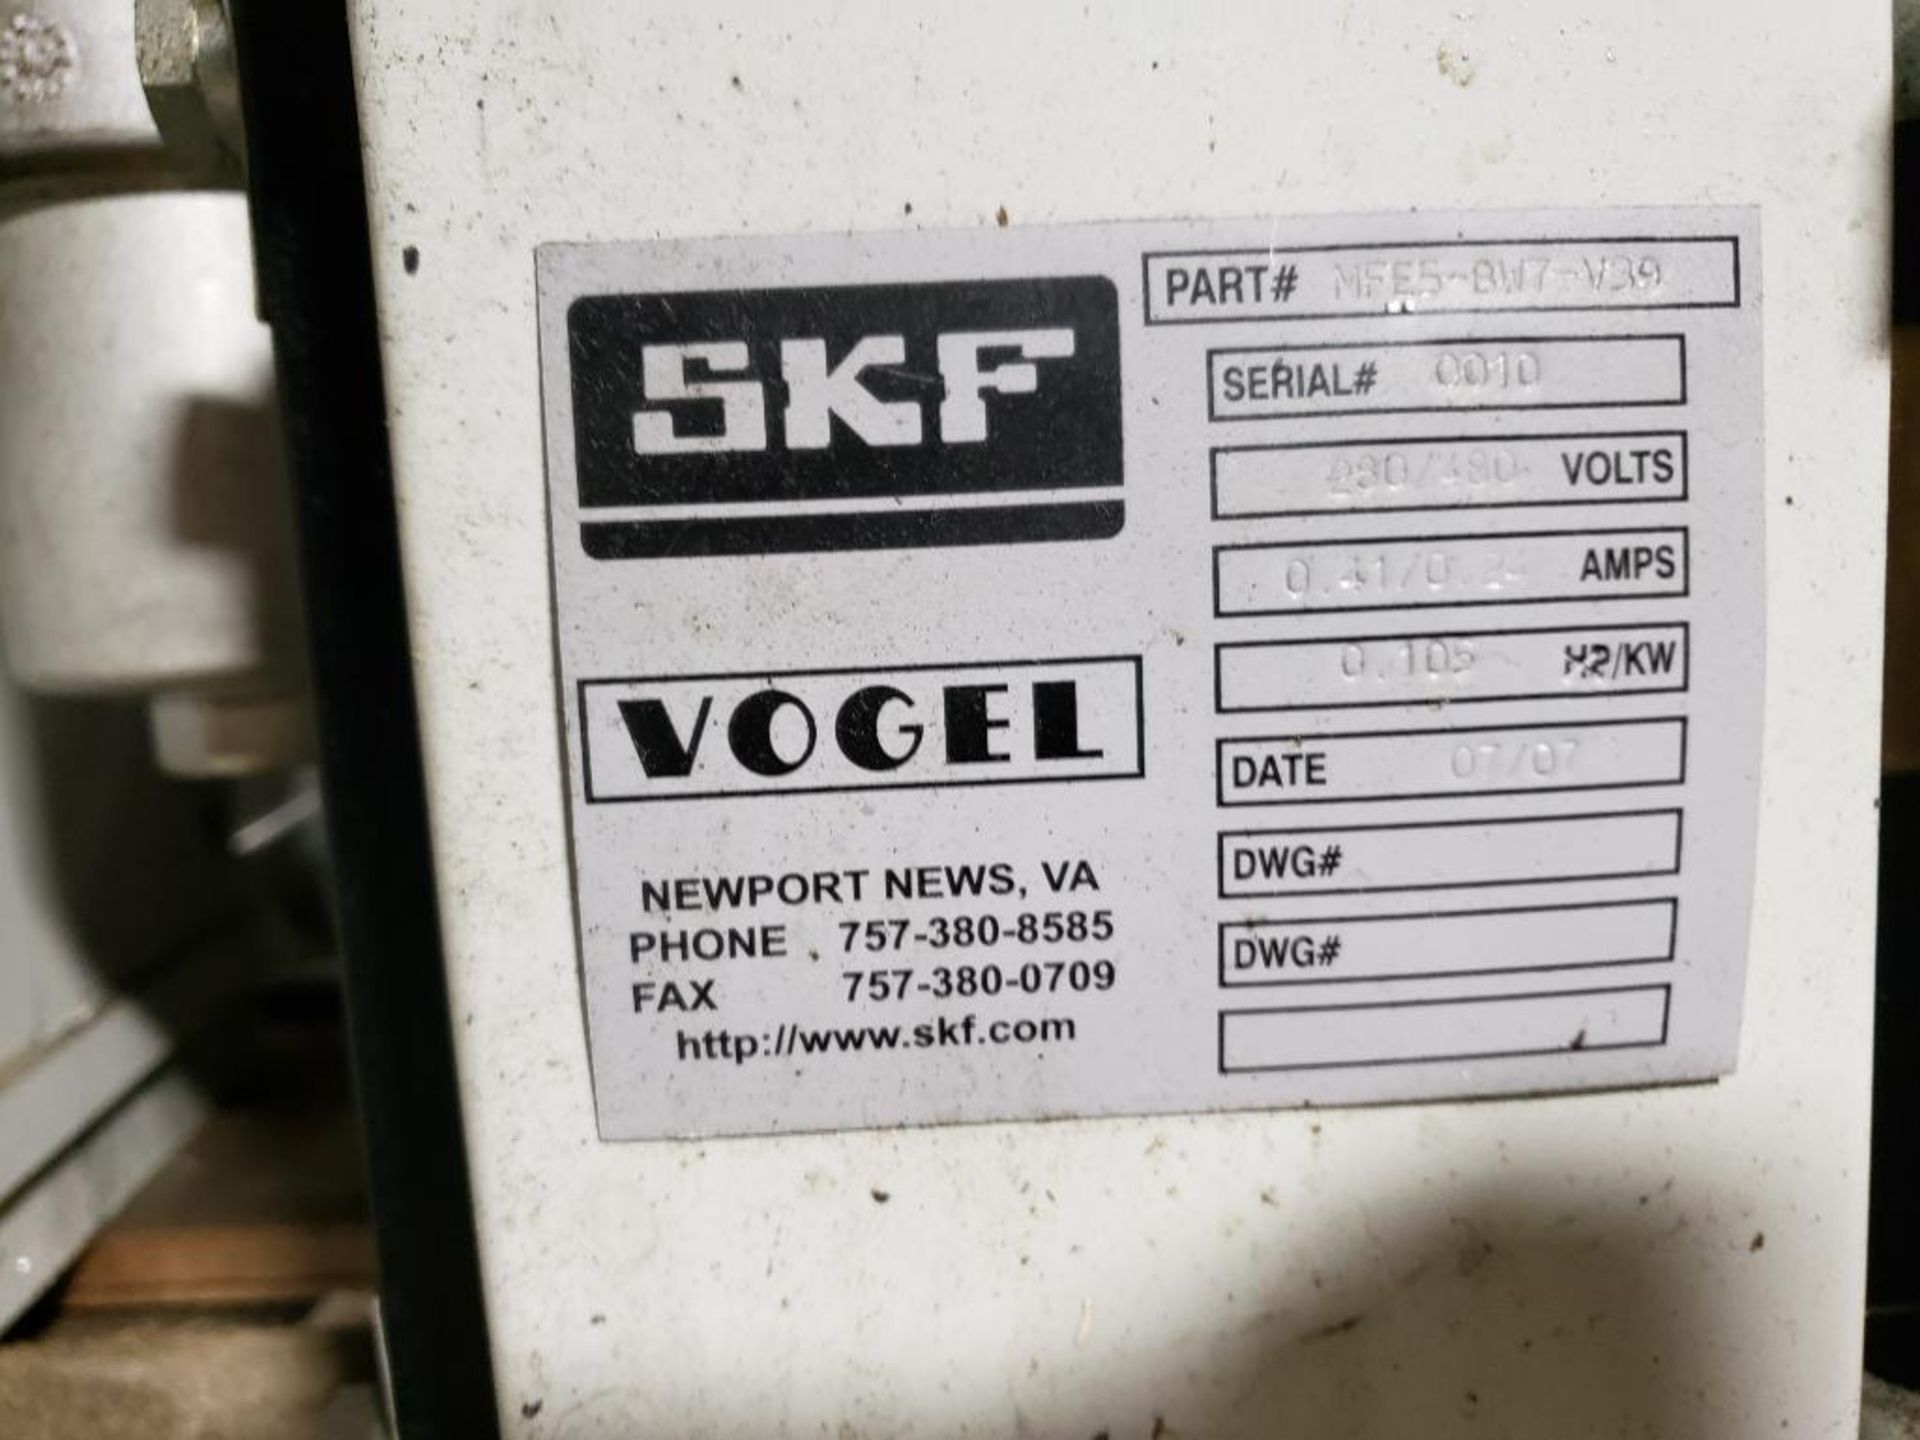 Qty 3 - SKF Vogul auto lube units. Part number MFE5-BW7-V39. - Image 3 of 5